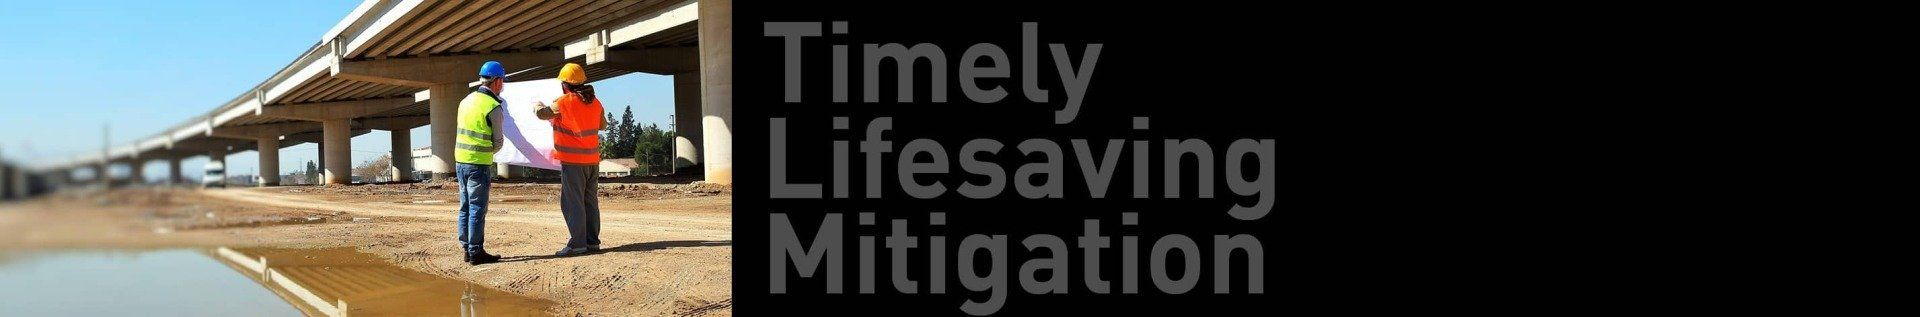 Timely Lifesaving Mitigation banner